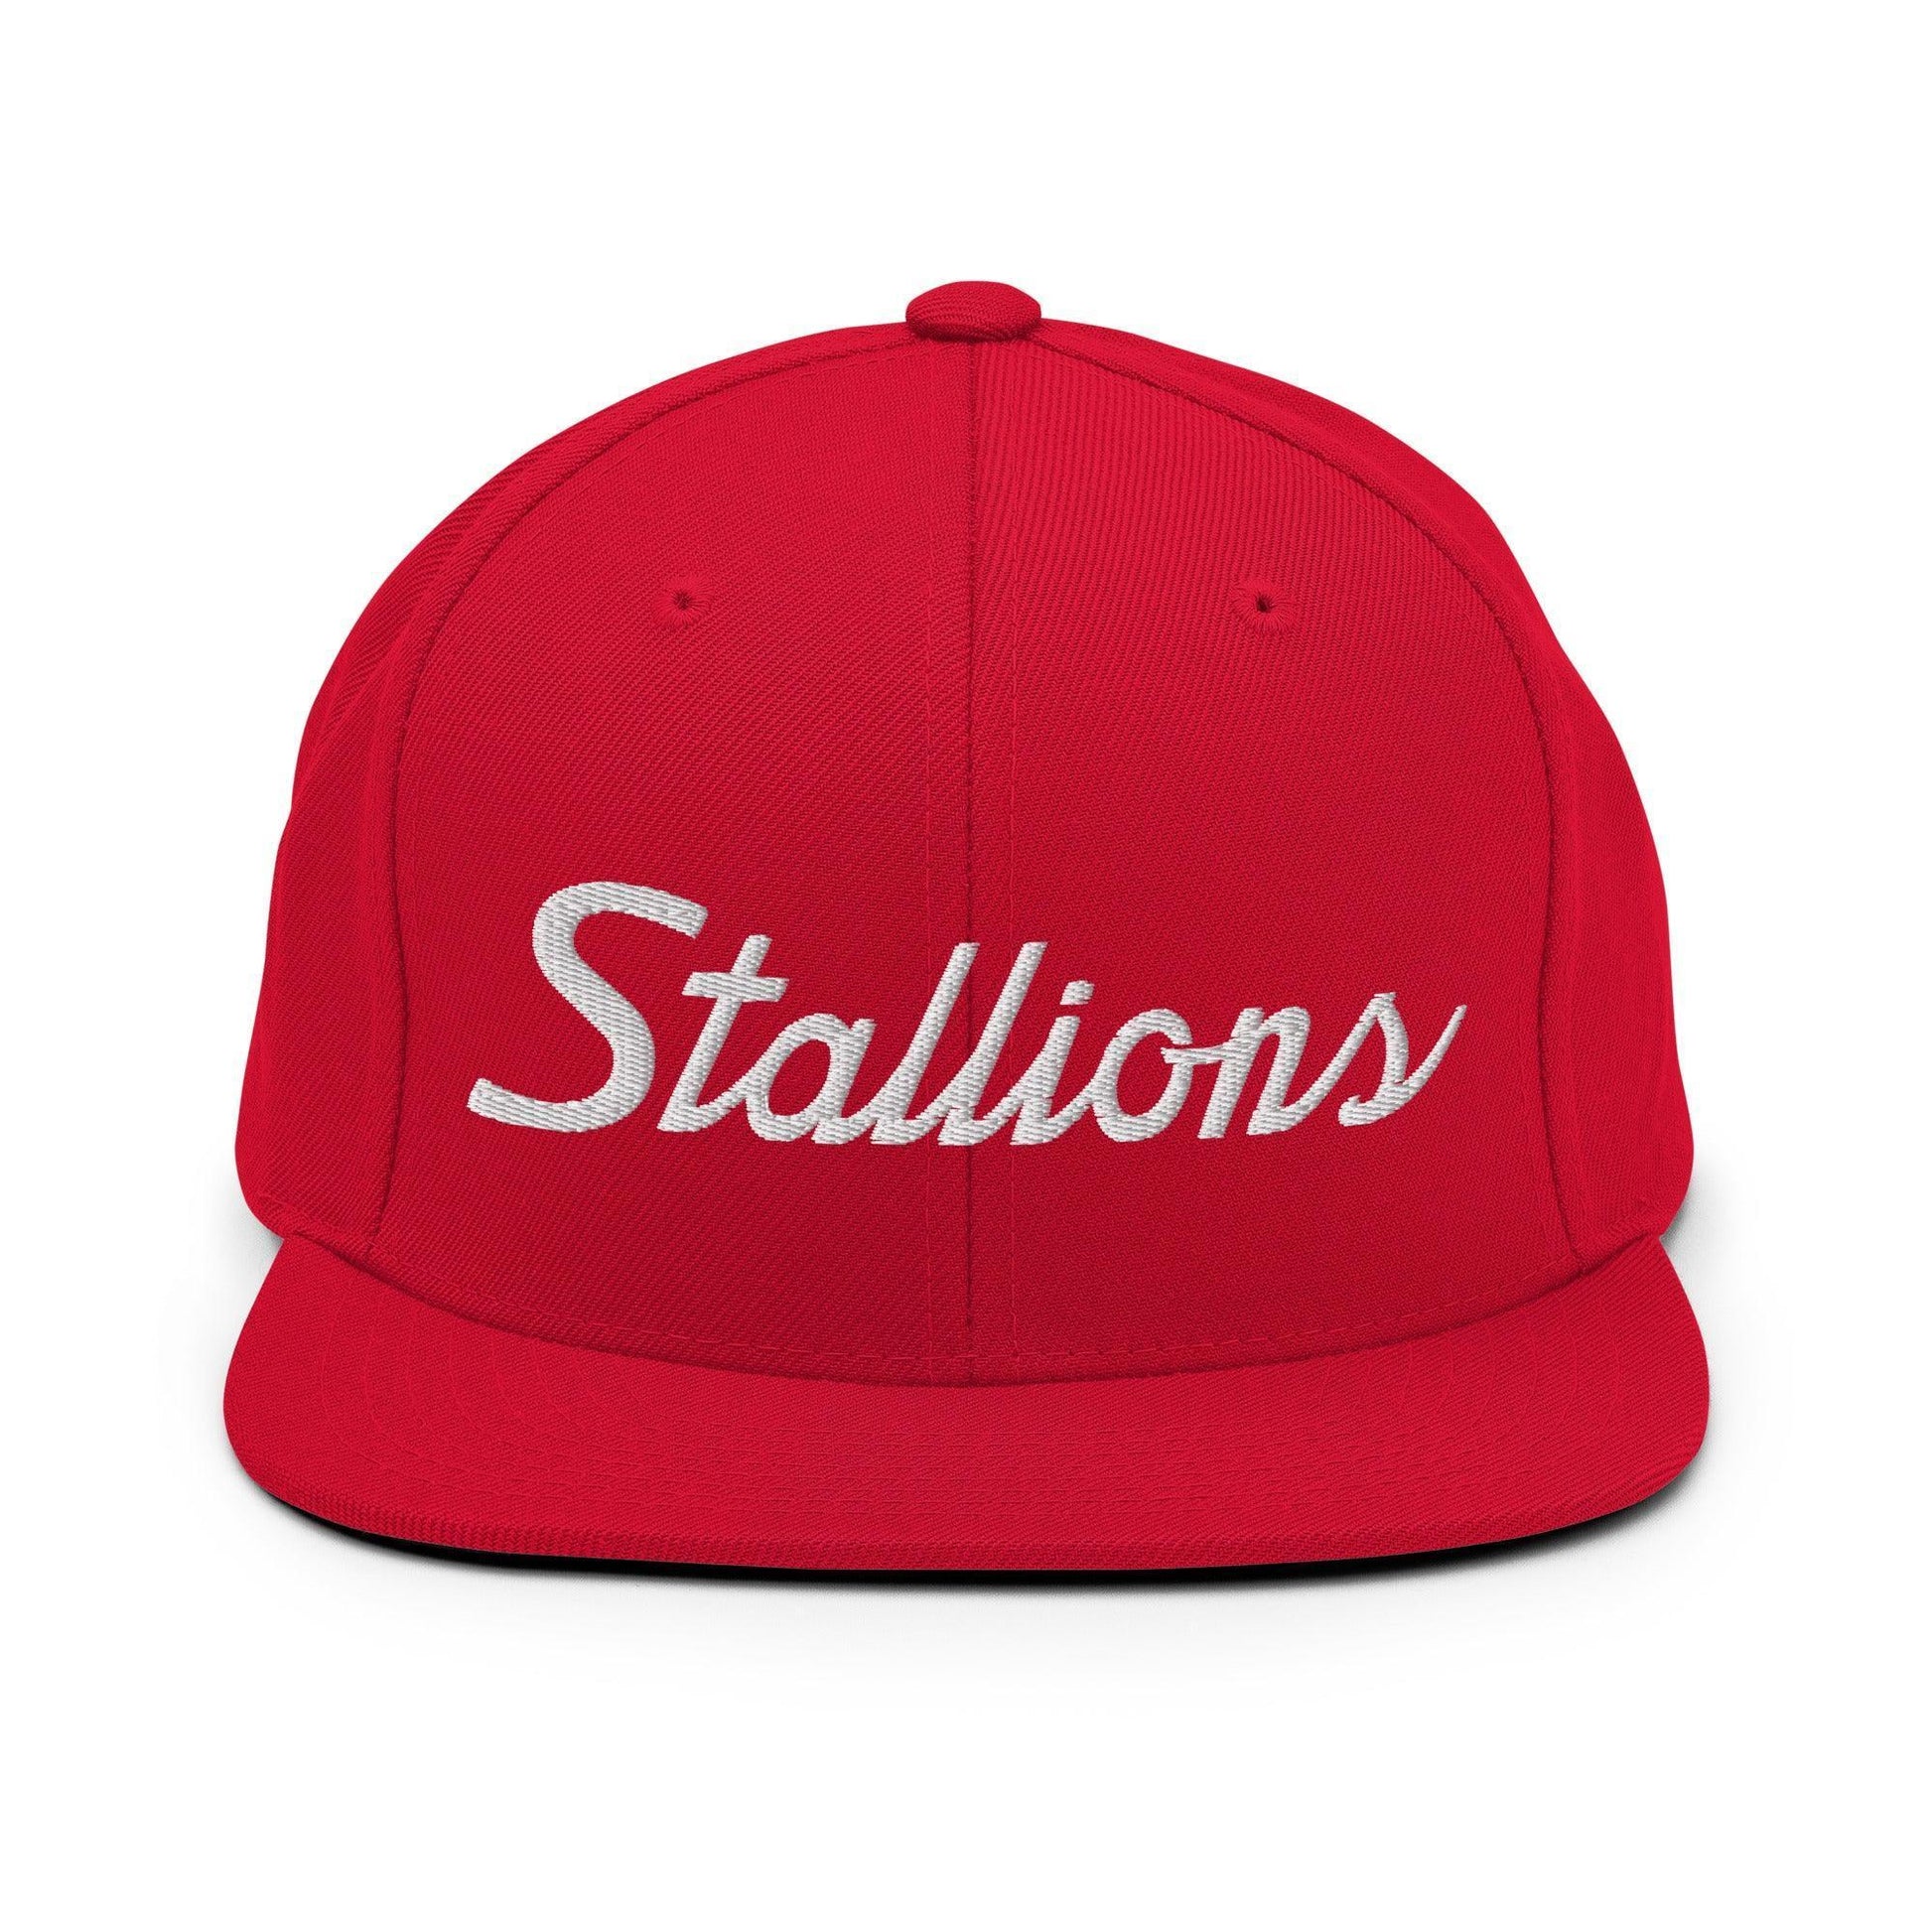 Stallions School Mascot Script Snapback Hat Red